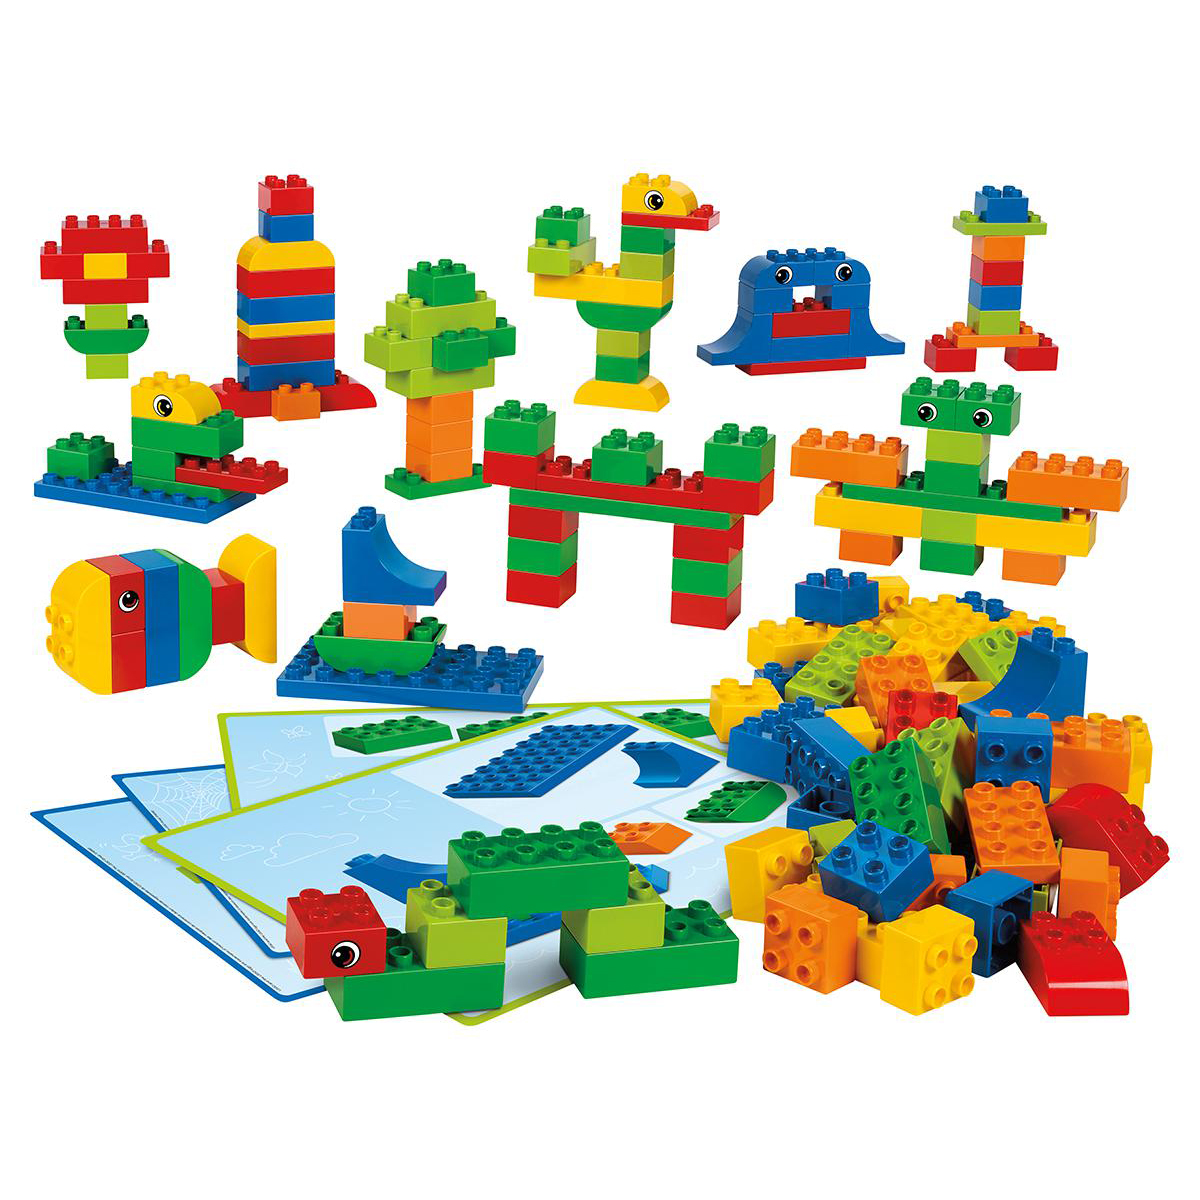  LEGO® Education Duplo Creative Brick Set 